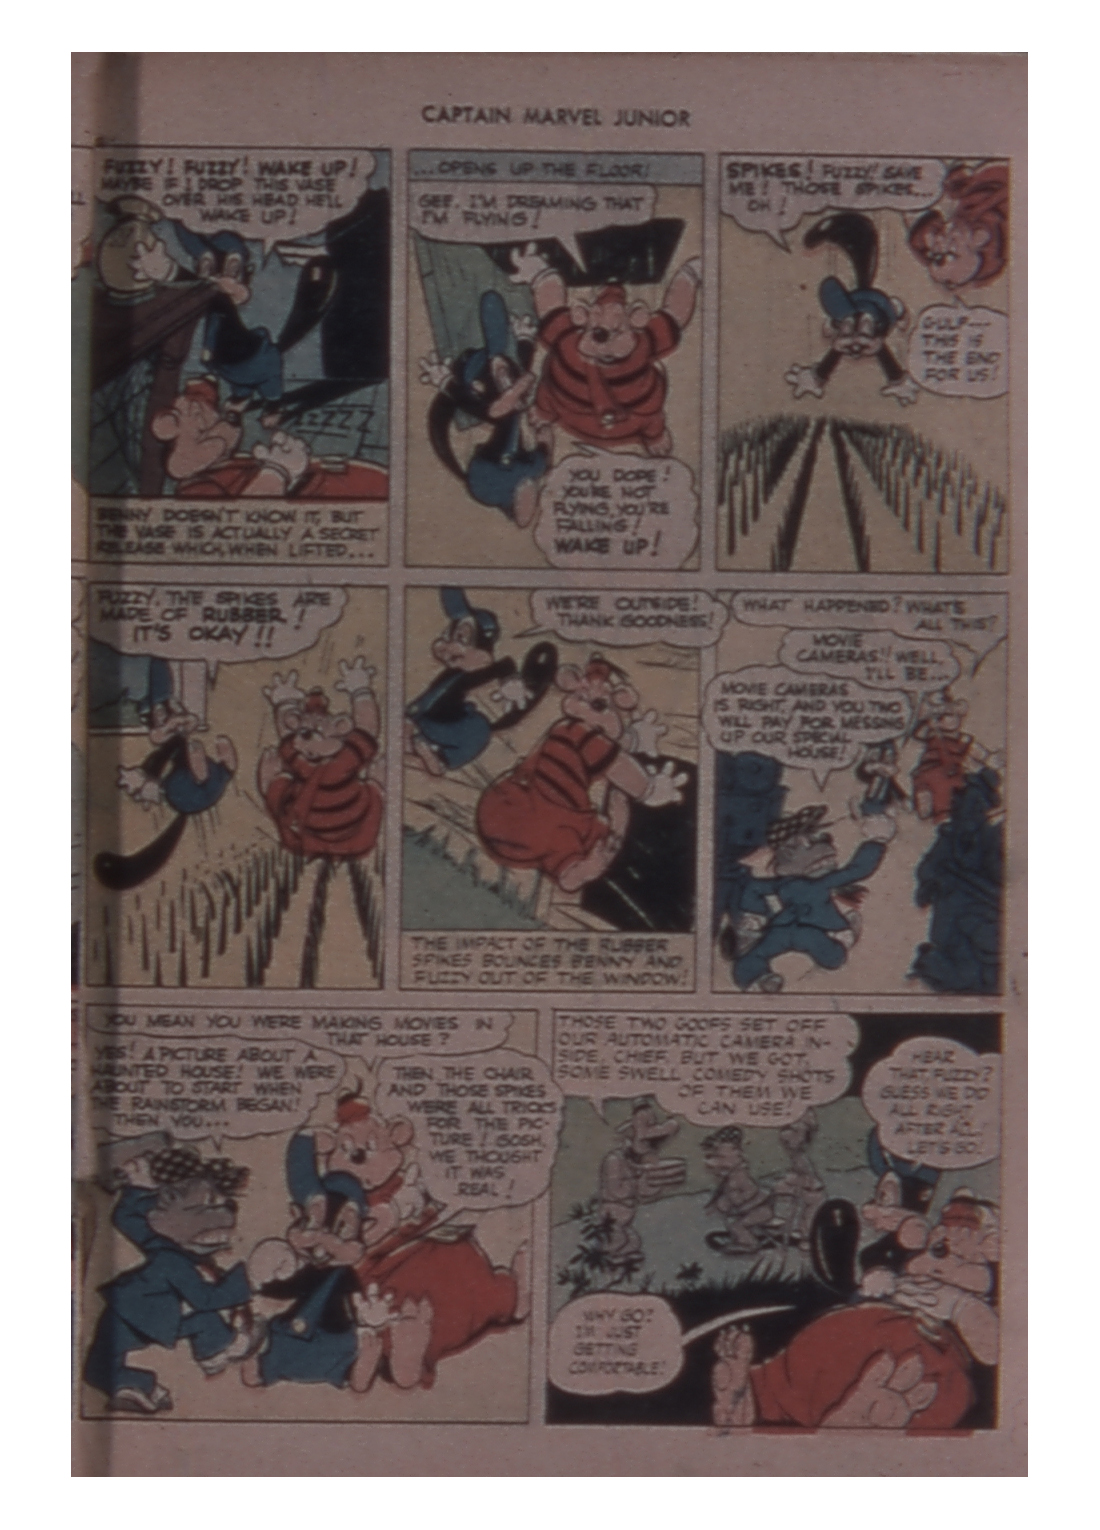 Read online Captain Marvel, Jr. comic -  Issue #65 - 41